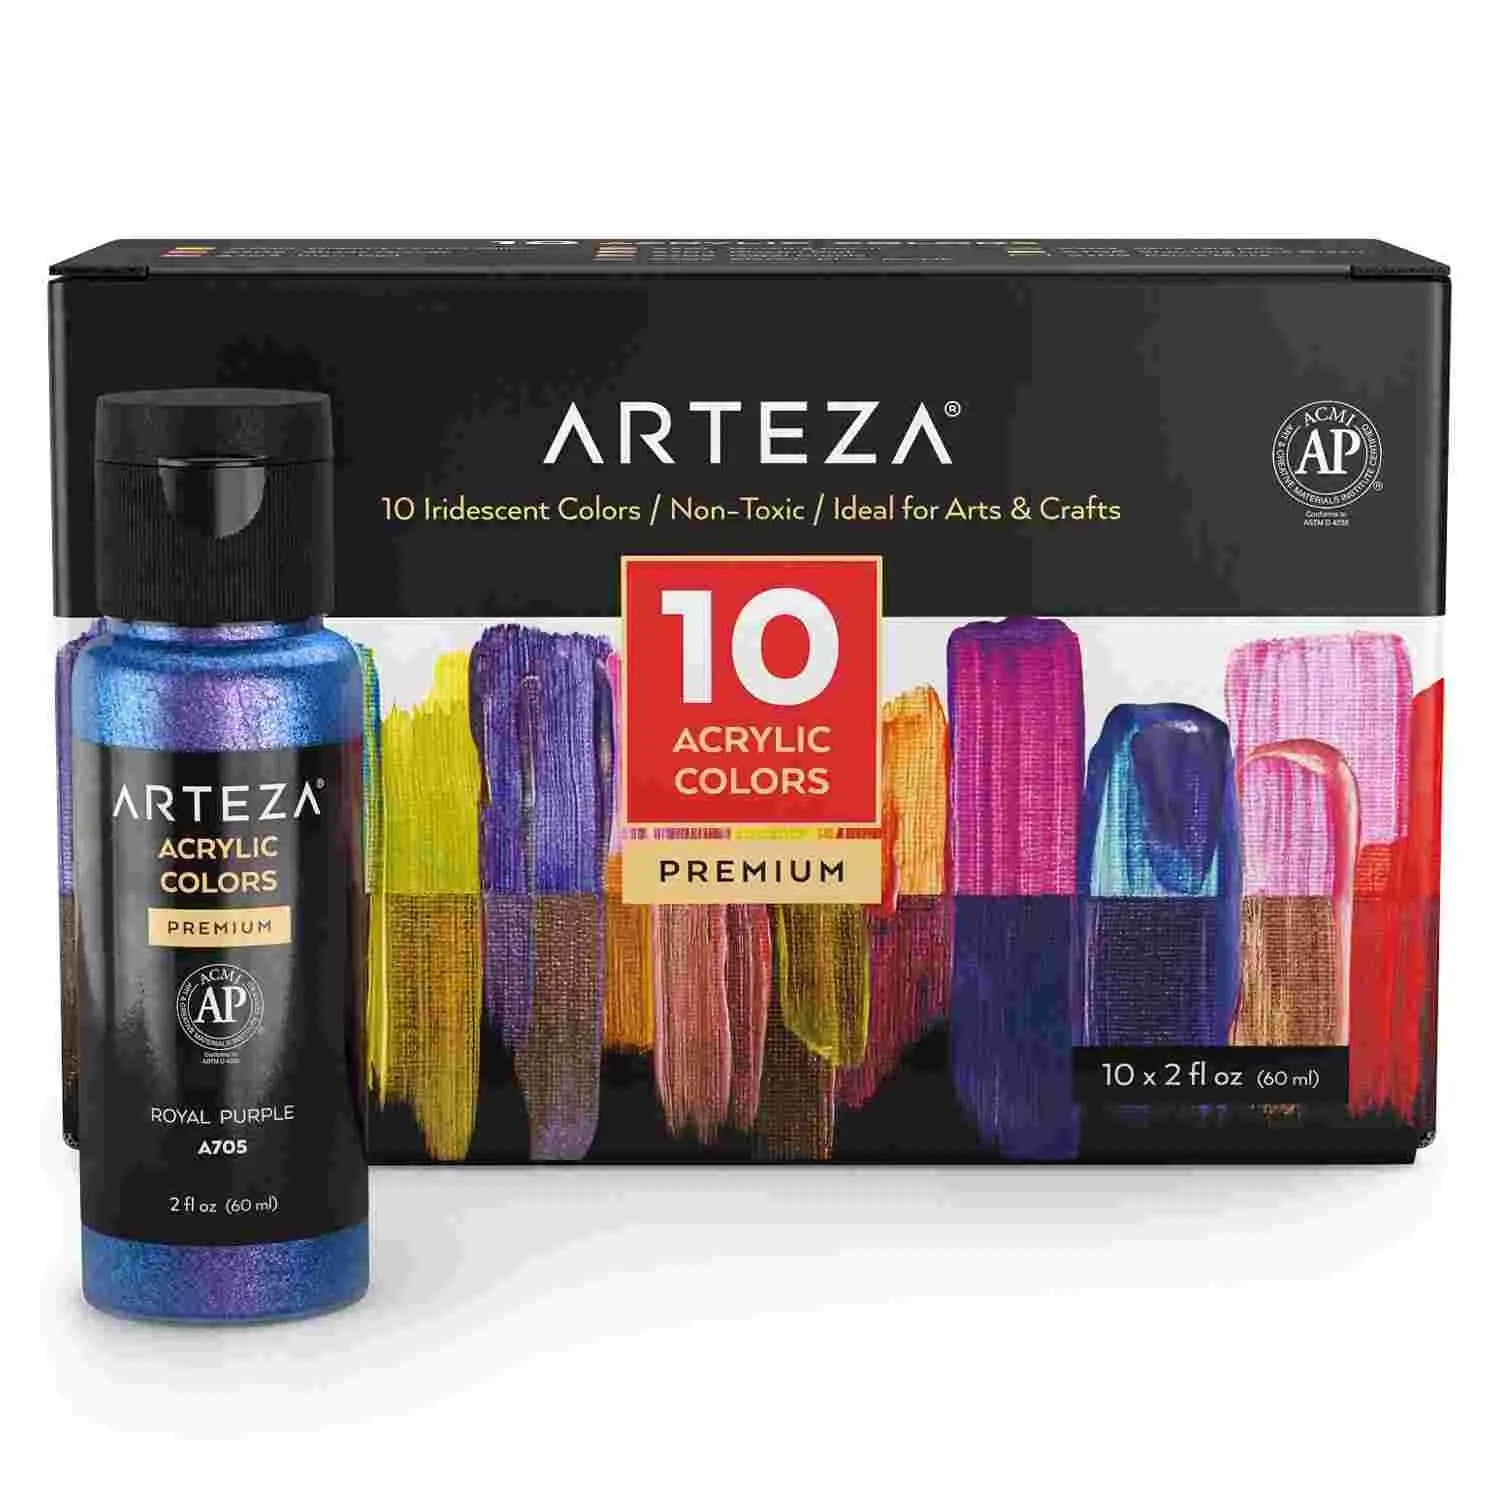 ARTEZA Iridescent Acrylic Paint, Set of 10 Chameleon Colors, 60ml Bottles, High Viscosity Shimmer Water-Based, Blendable Paints, Art Supplies for Canvas, Wood, Rocks, Fabrics Arteza